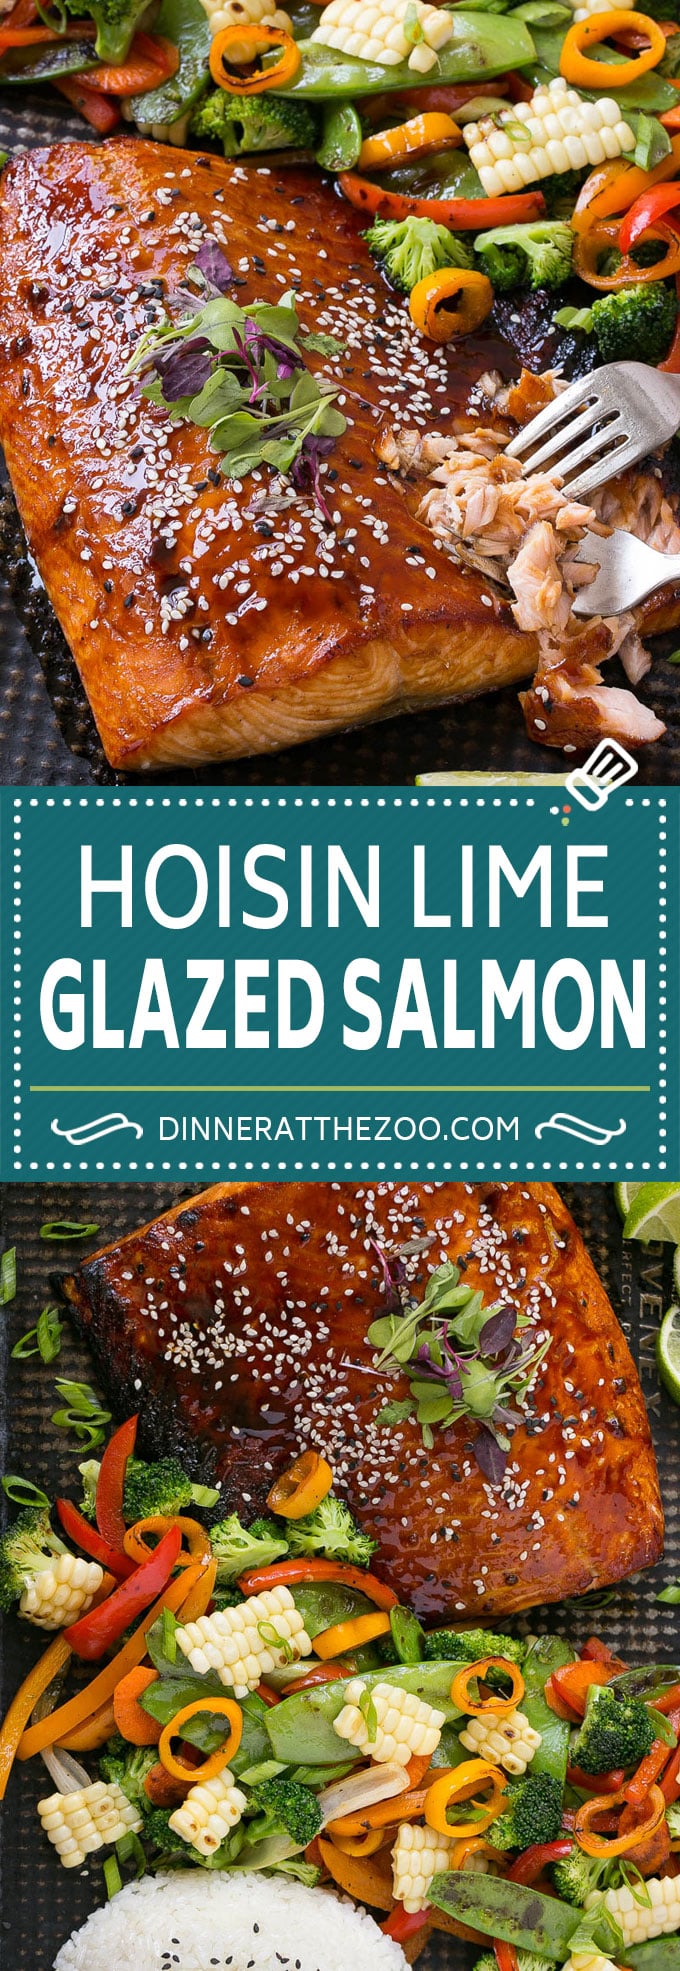 Asian Salmon Recipe | Sheet Pan Salmon #salmon #vegetables #dinner #dinneratthezoo #healthy